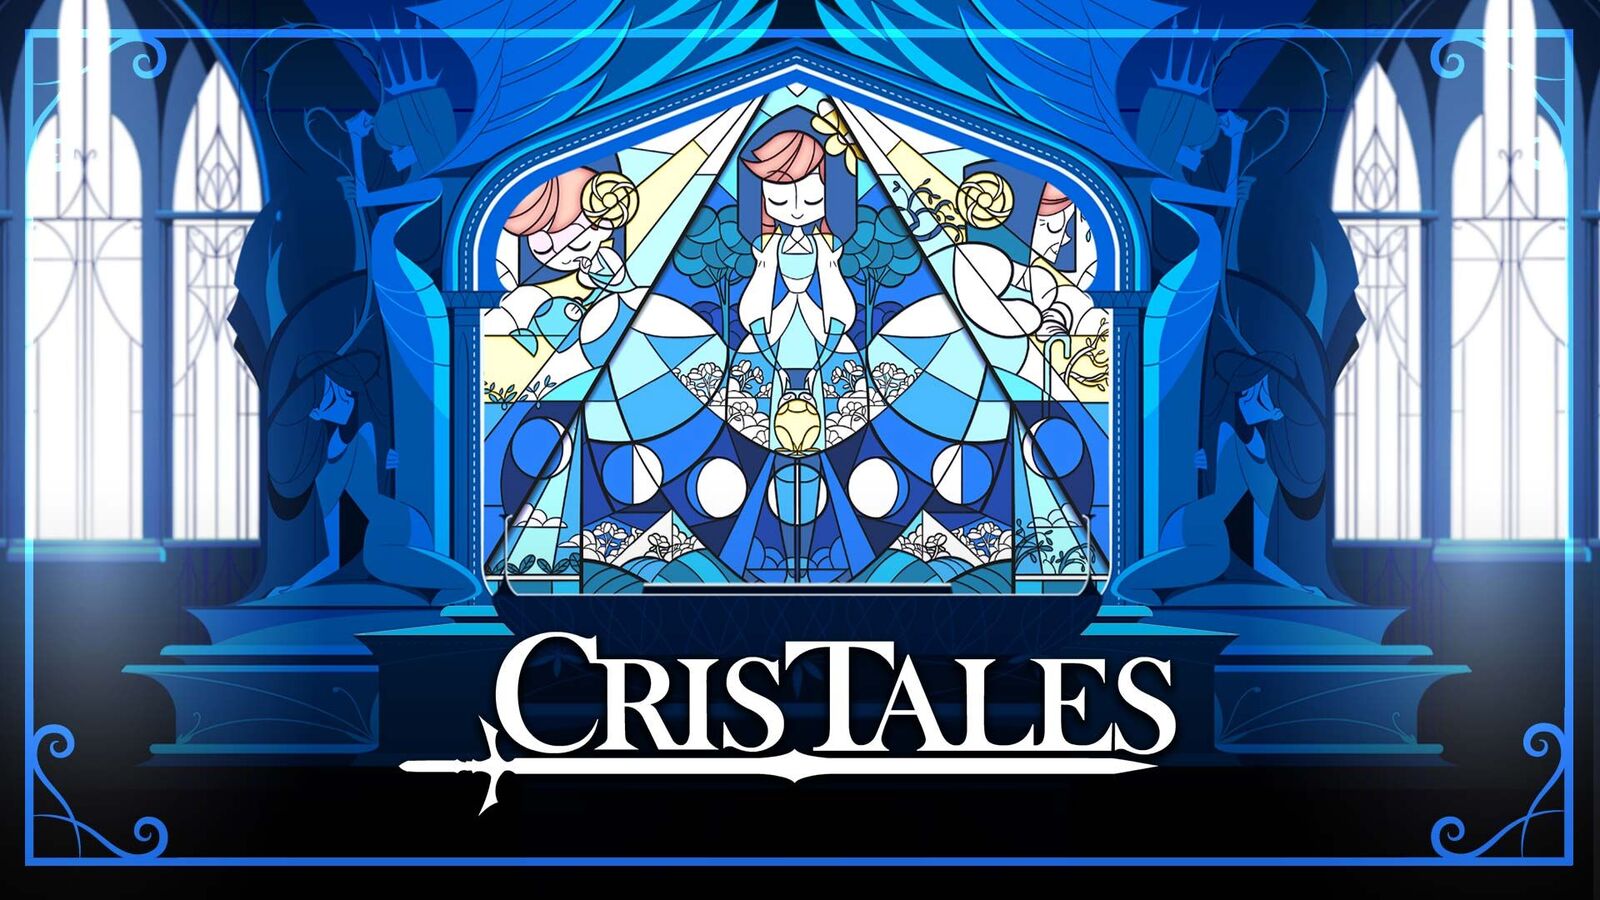 Cris Tales, Cris Tales Gameplay Trailer, Cris Tales Demo, GDR a turni, Modus Games